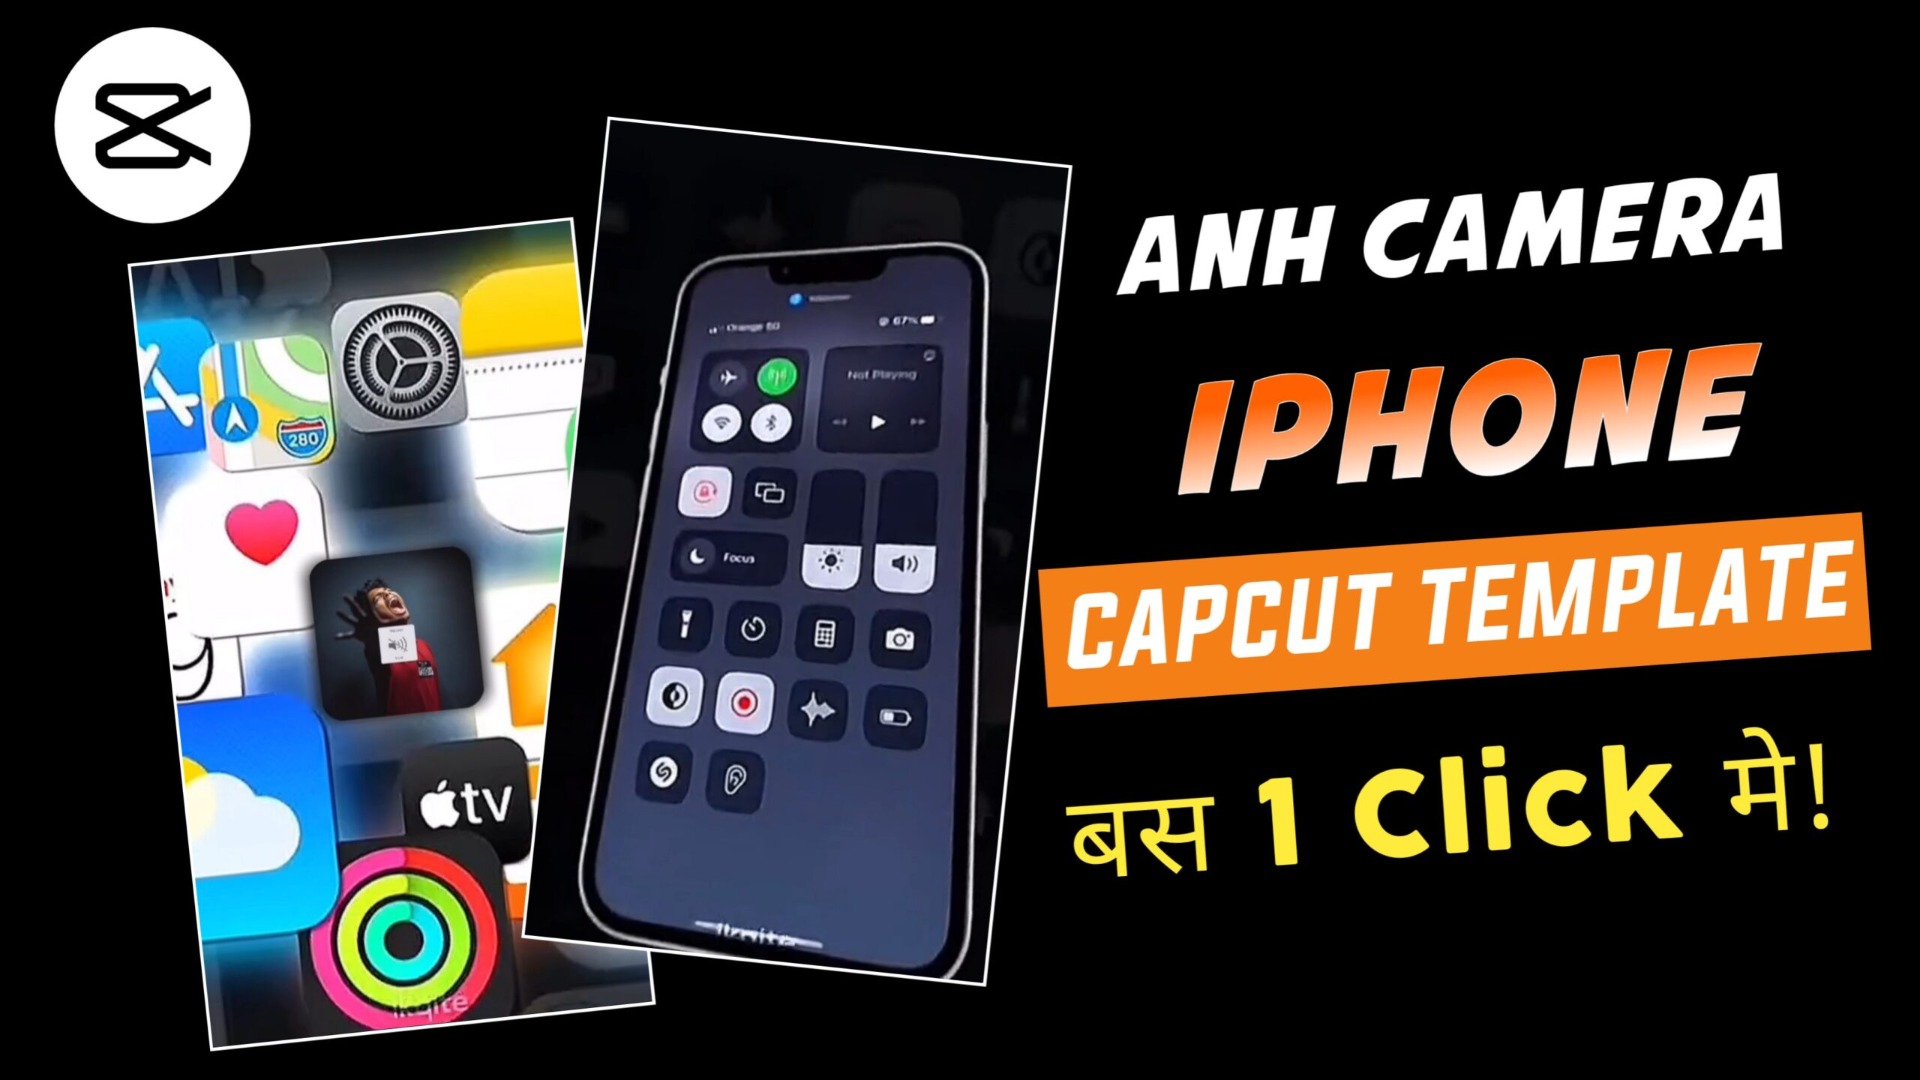 Anh Camera iPhone Capcut Template App Apk Download